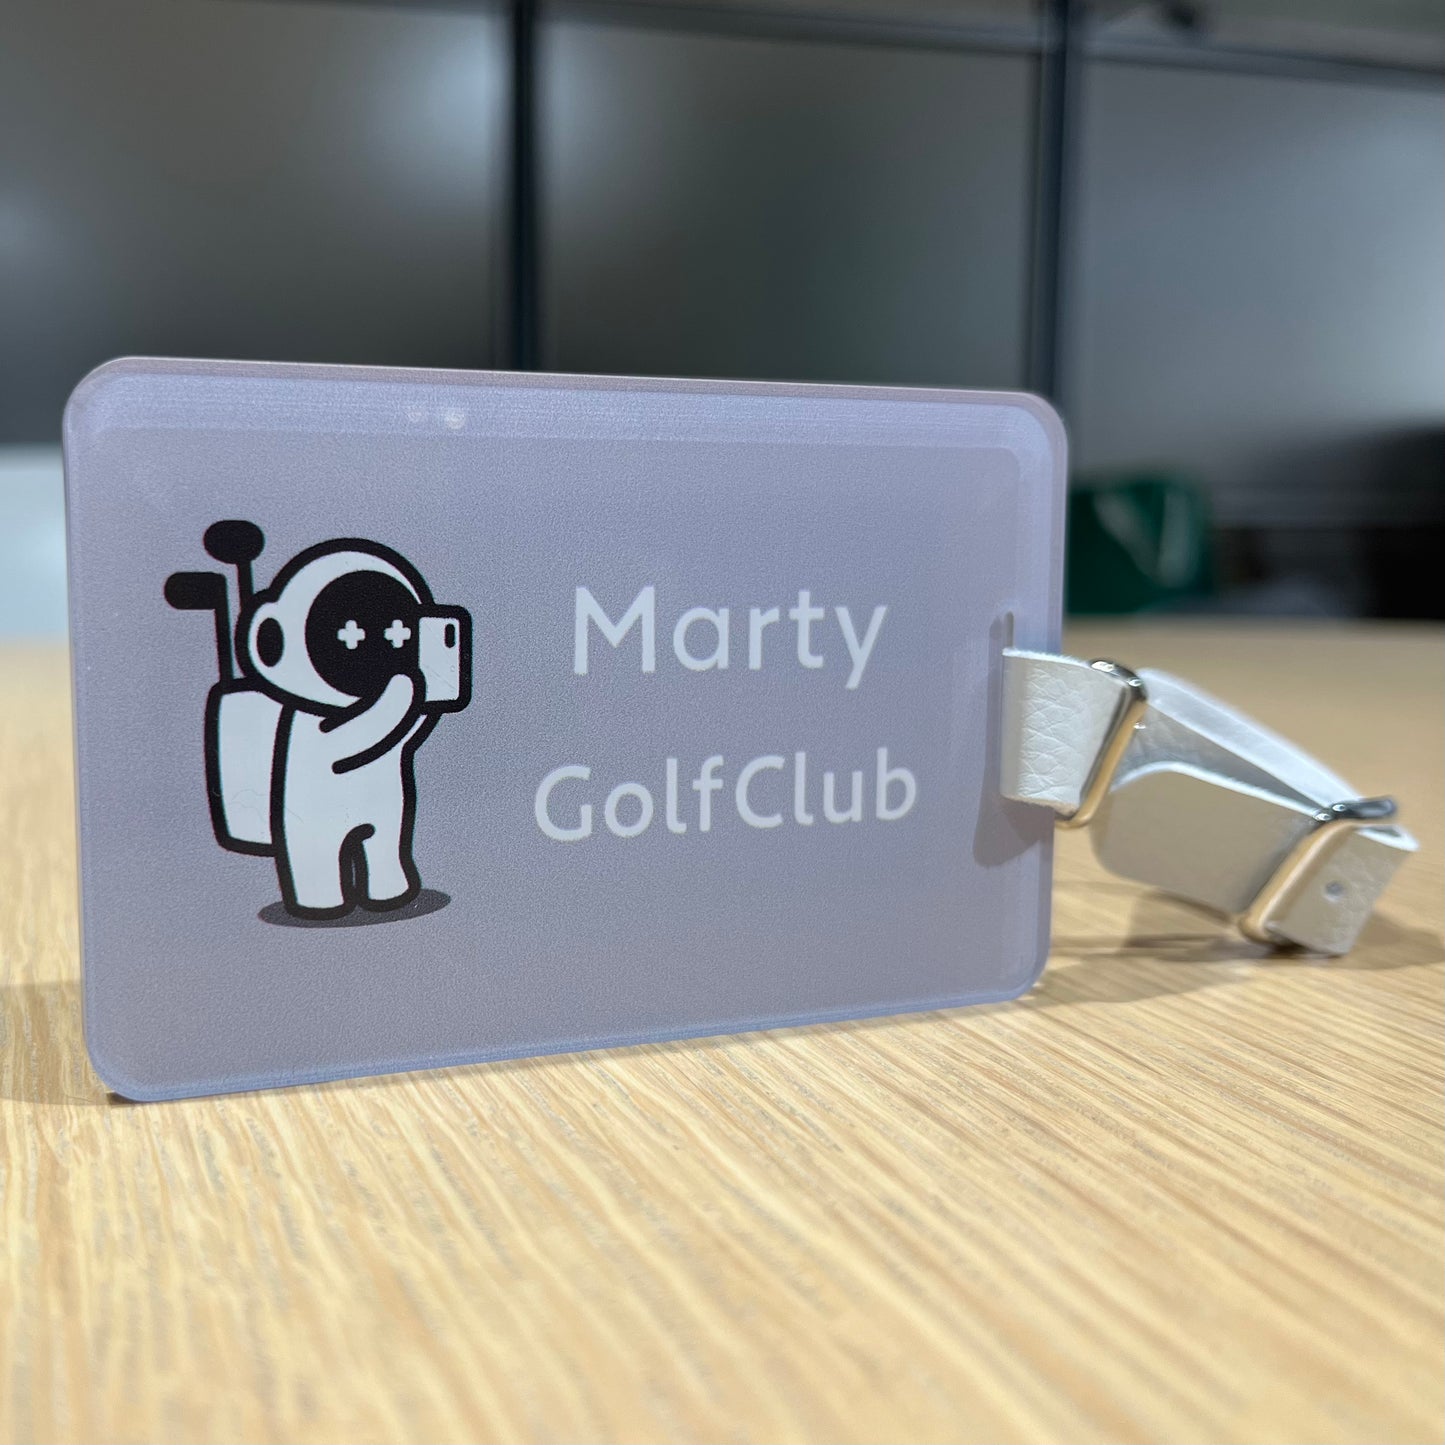 Marty Golf Club nametag